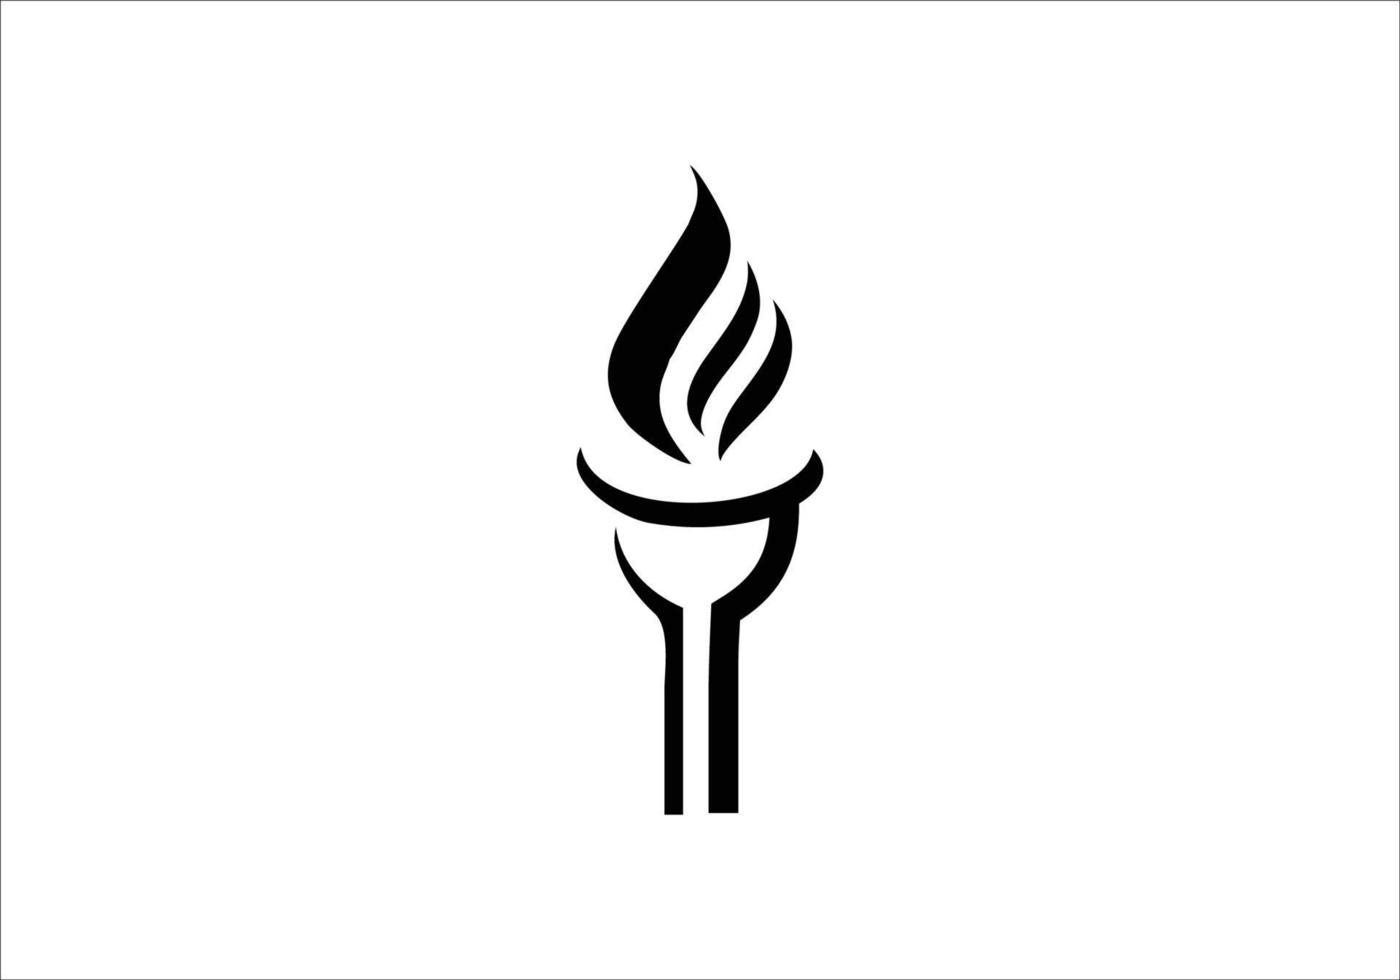 Torch logo design inspiration template vector